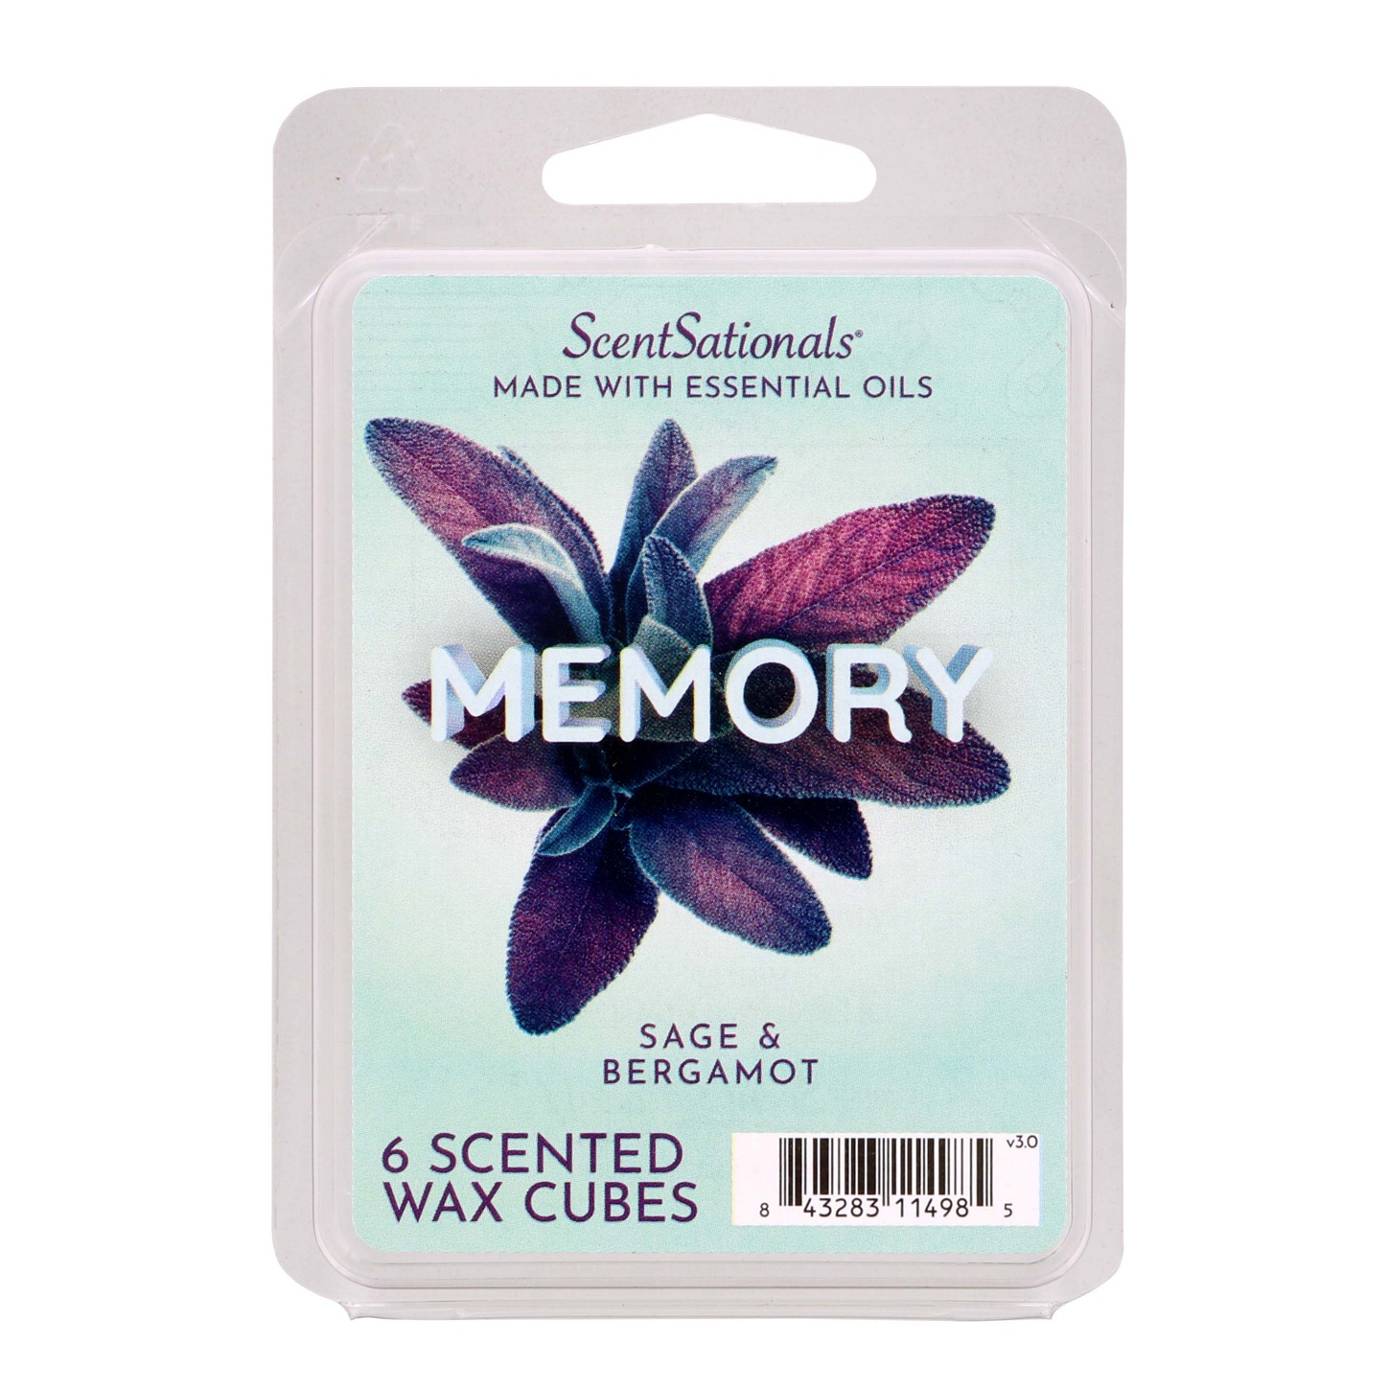 ScentSationals Memory Sage & Bergamot Scented Wax Cubes, 6 Ct; image 1 of 2